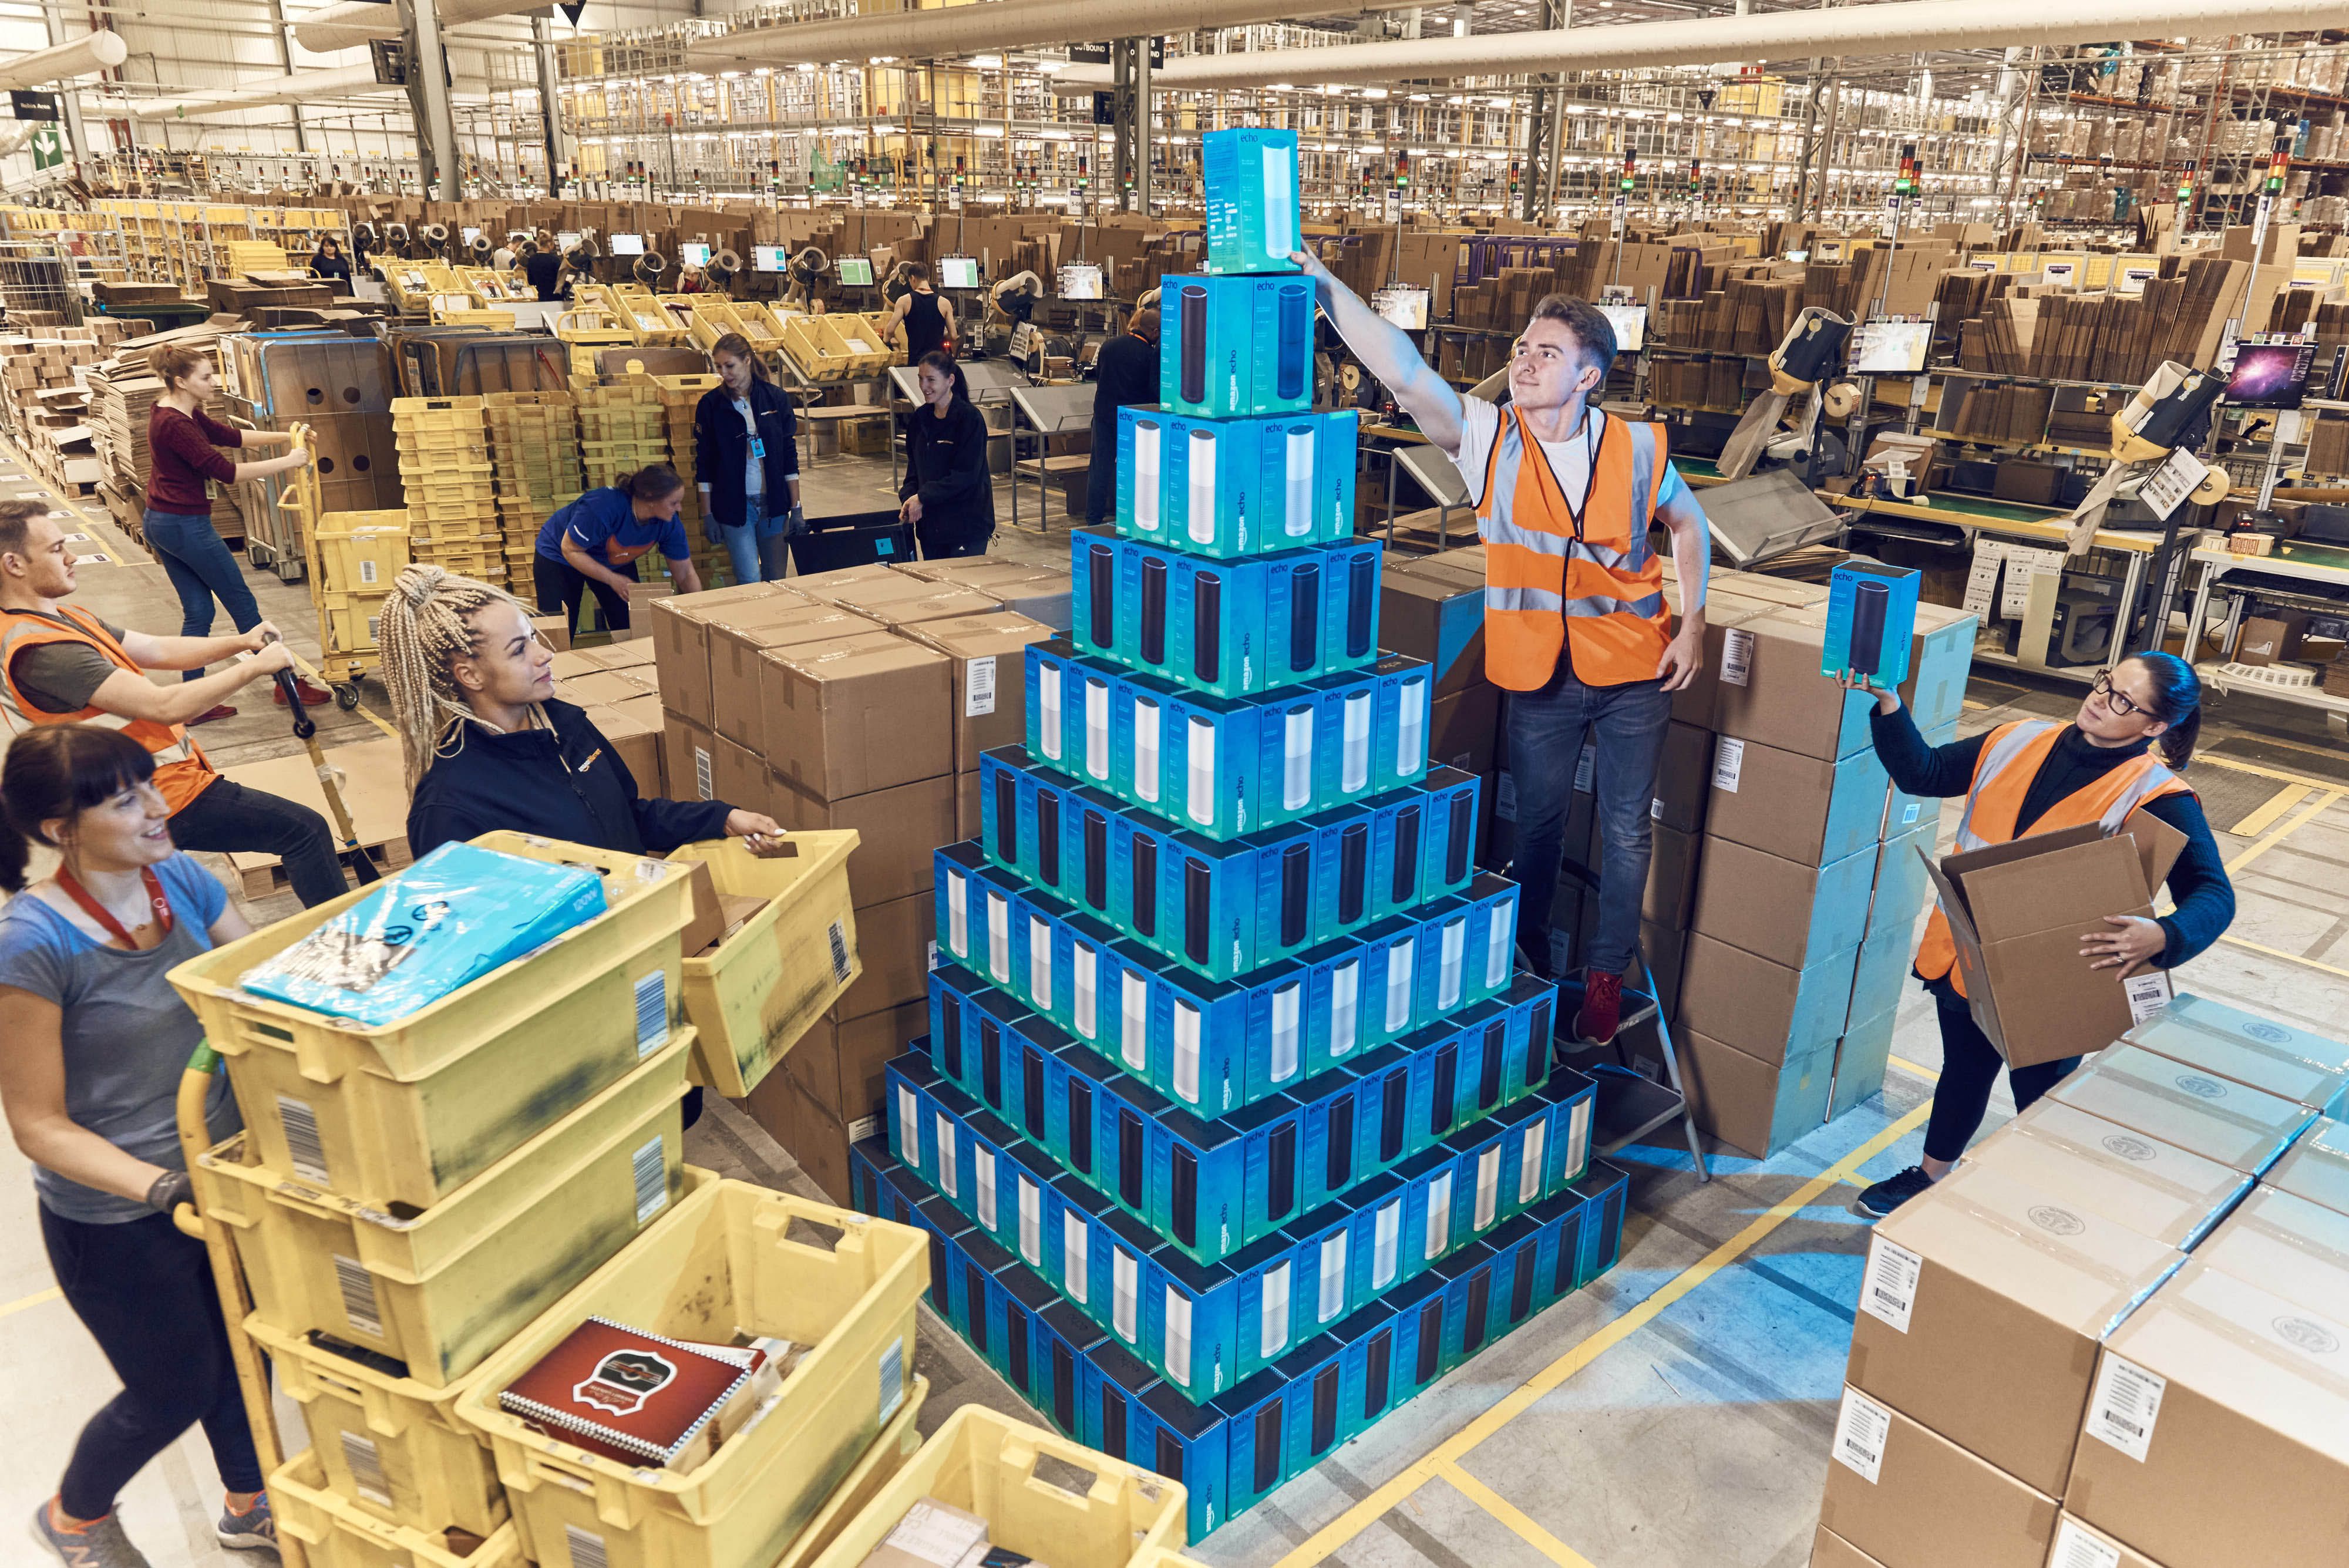 Amazon shipped more than a billion items this holiday season